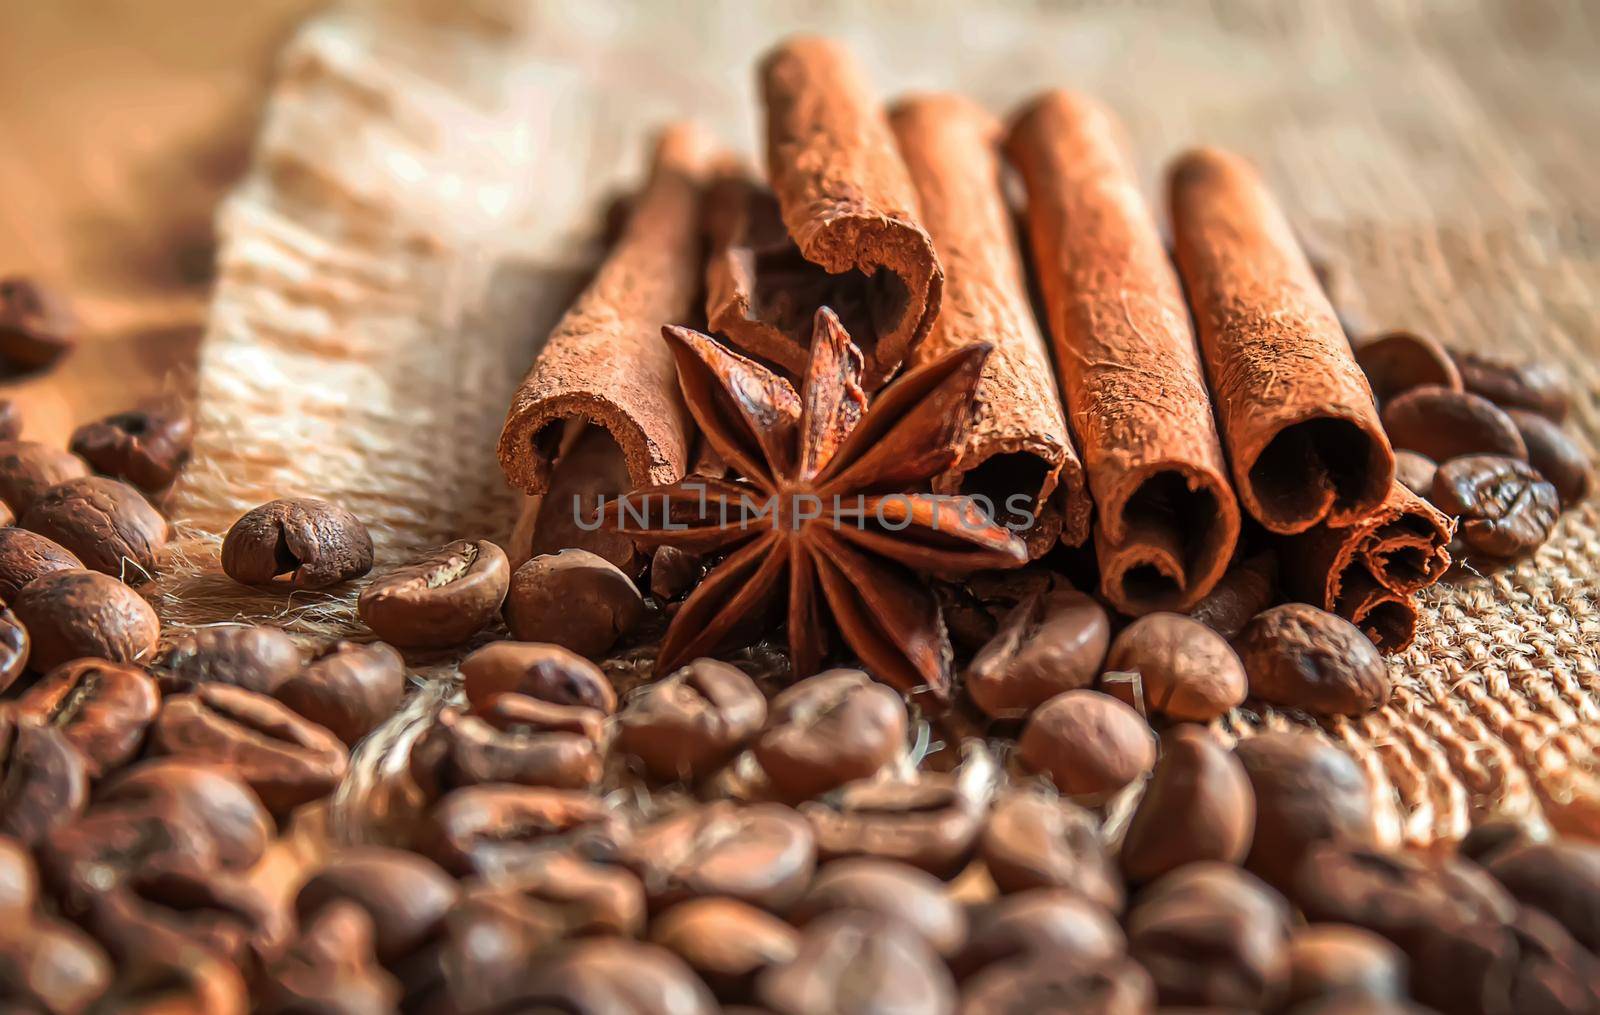 Anise stars and cinnamon on roasted coffee beans.selectiv focus .food